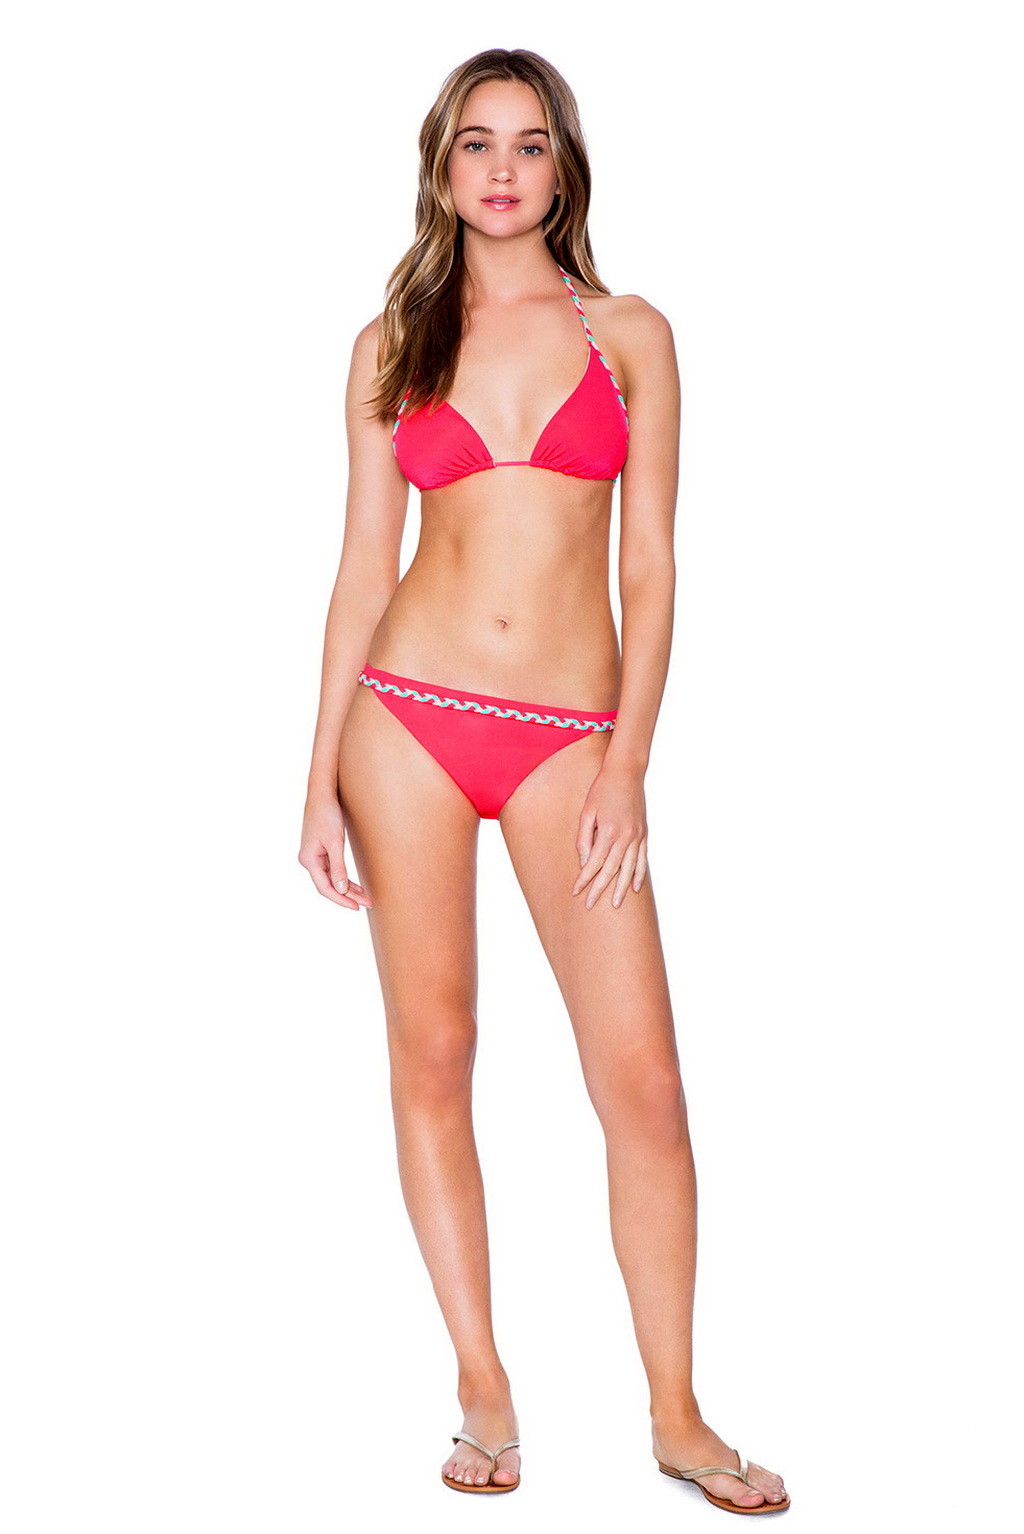 Rosie tupper posant dans un bikini très sexy de shoshanna
 #75153716